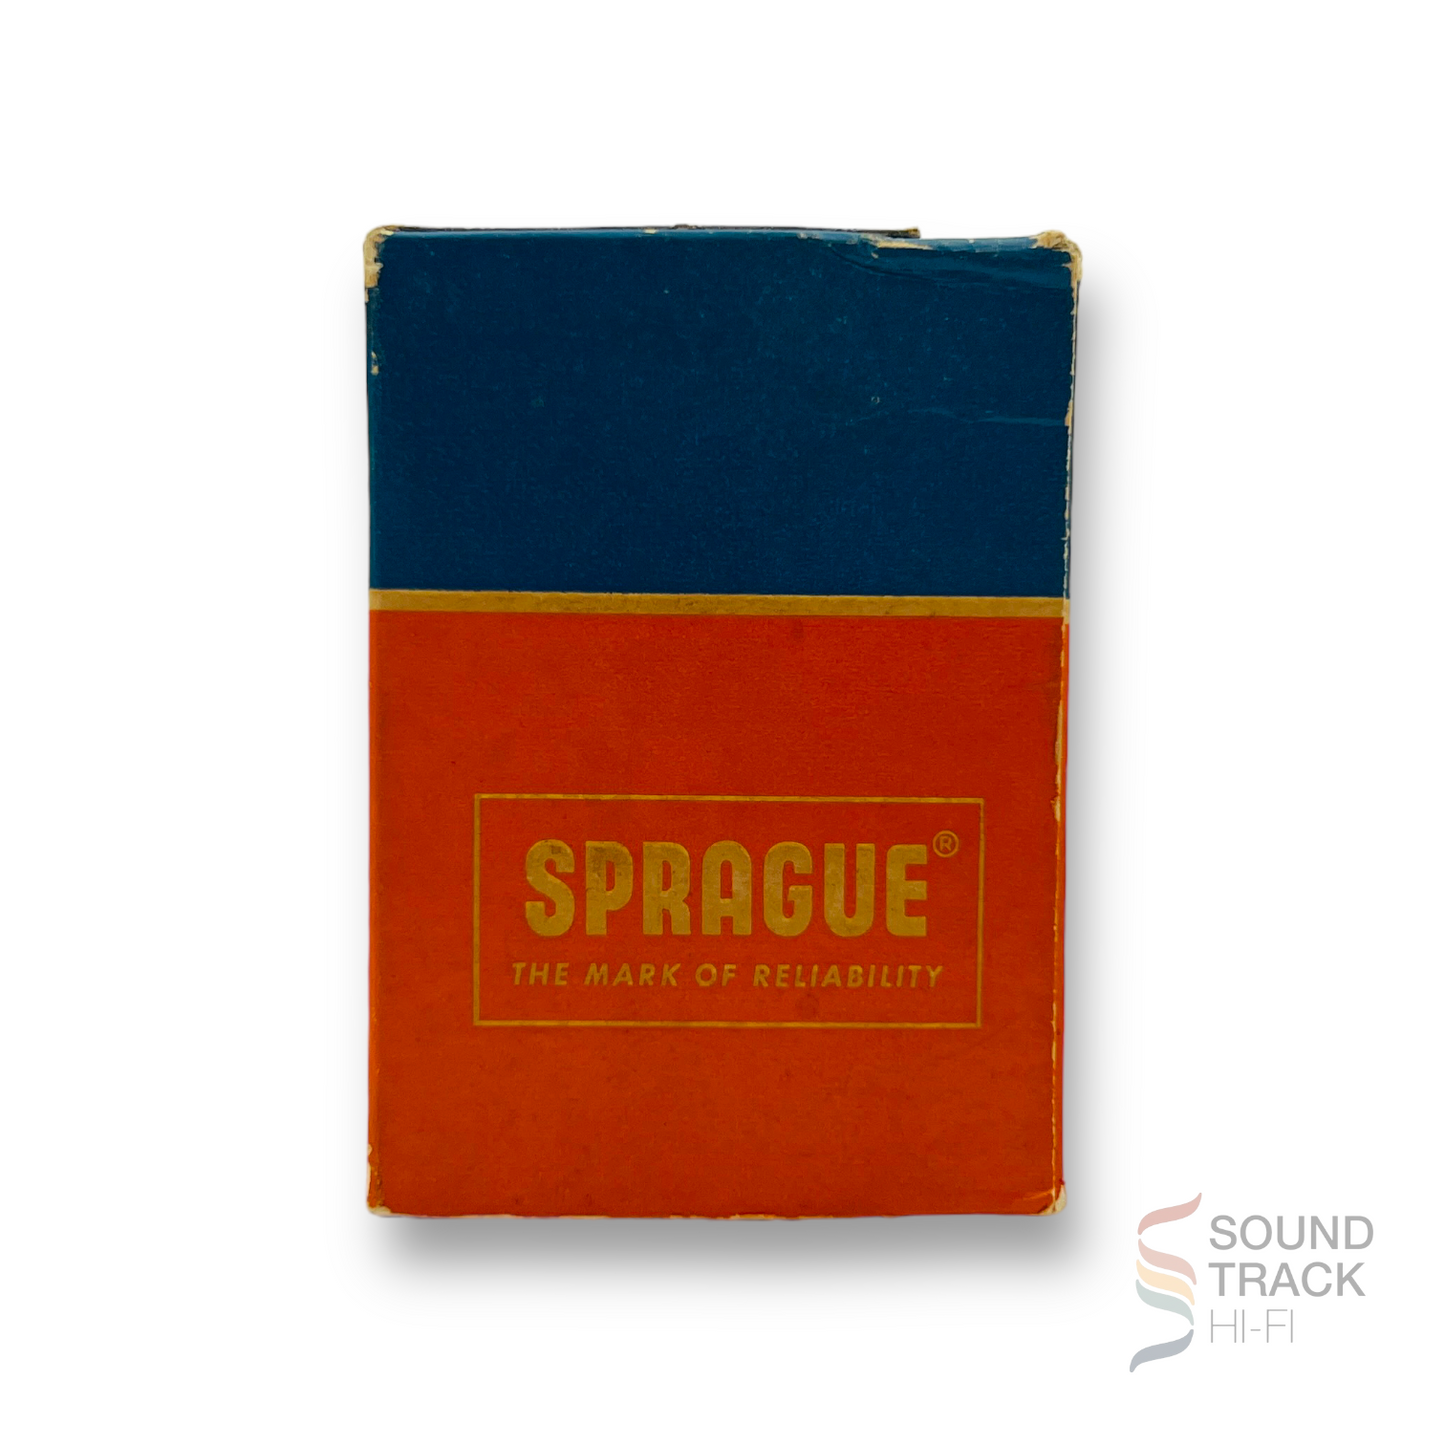 Sprague 0.1 uf 600 VDC Black Beauty Capacitors Case of 24